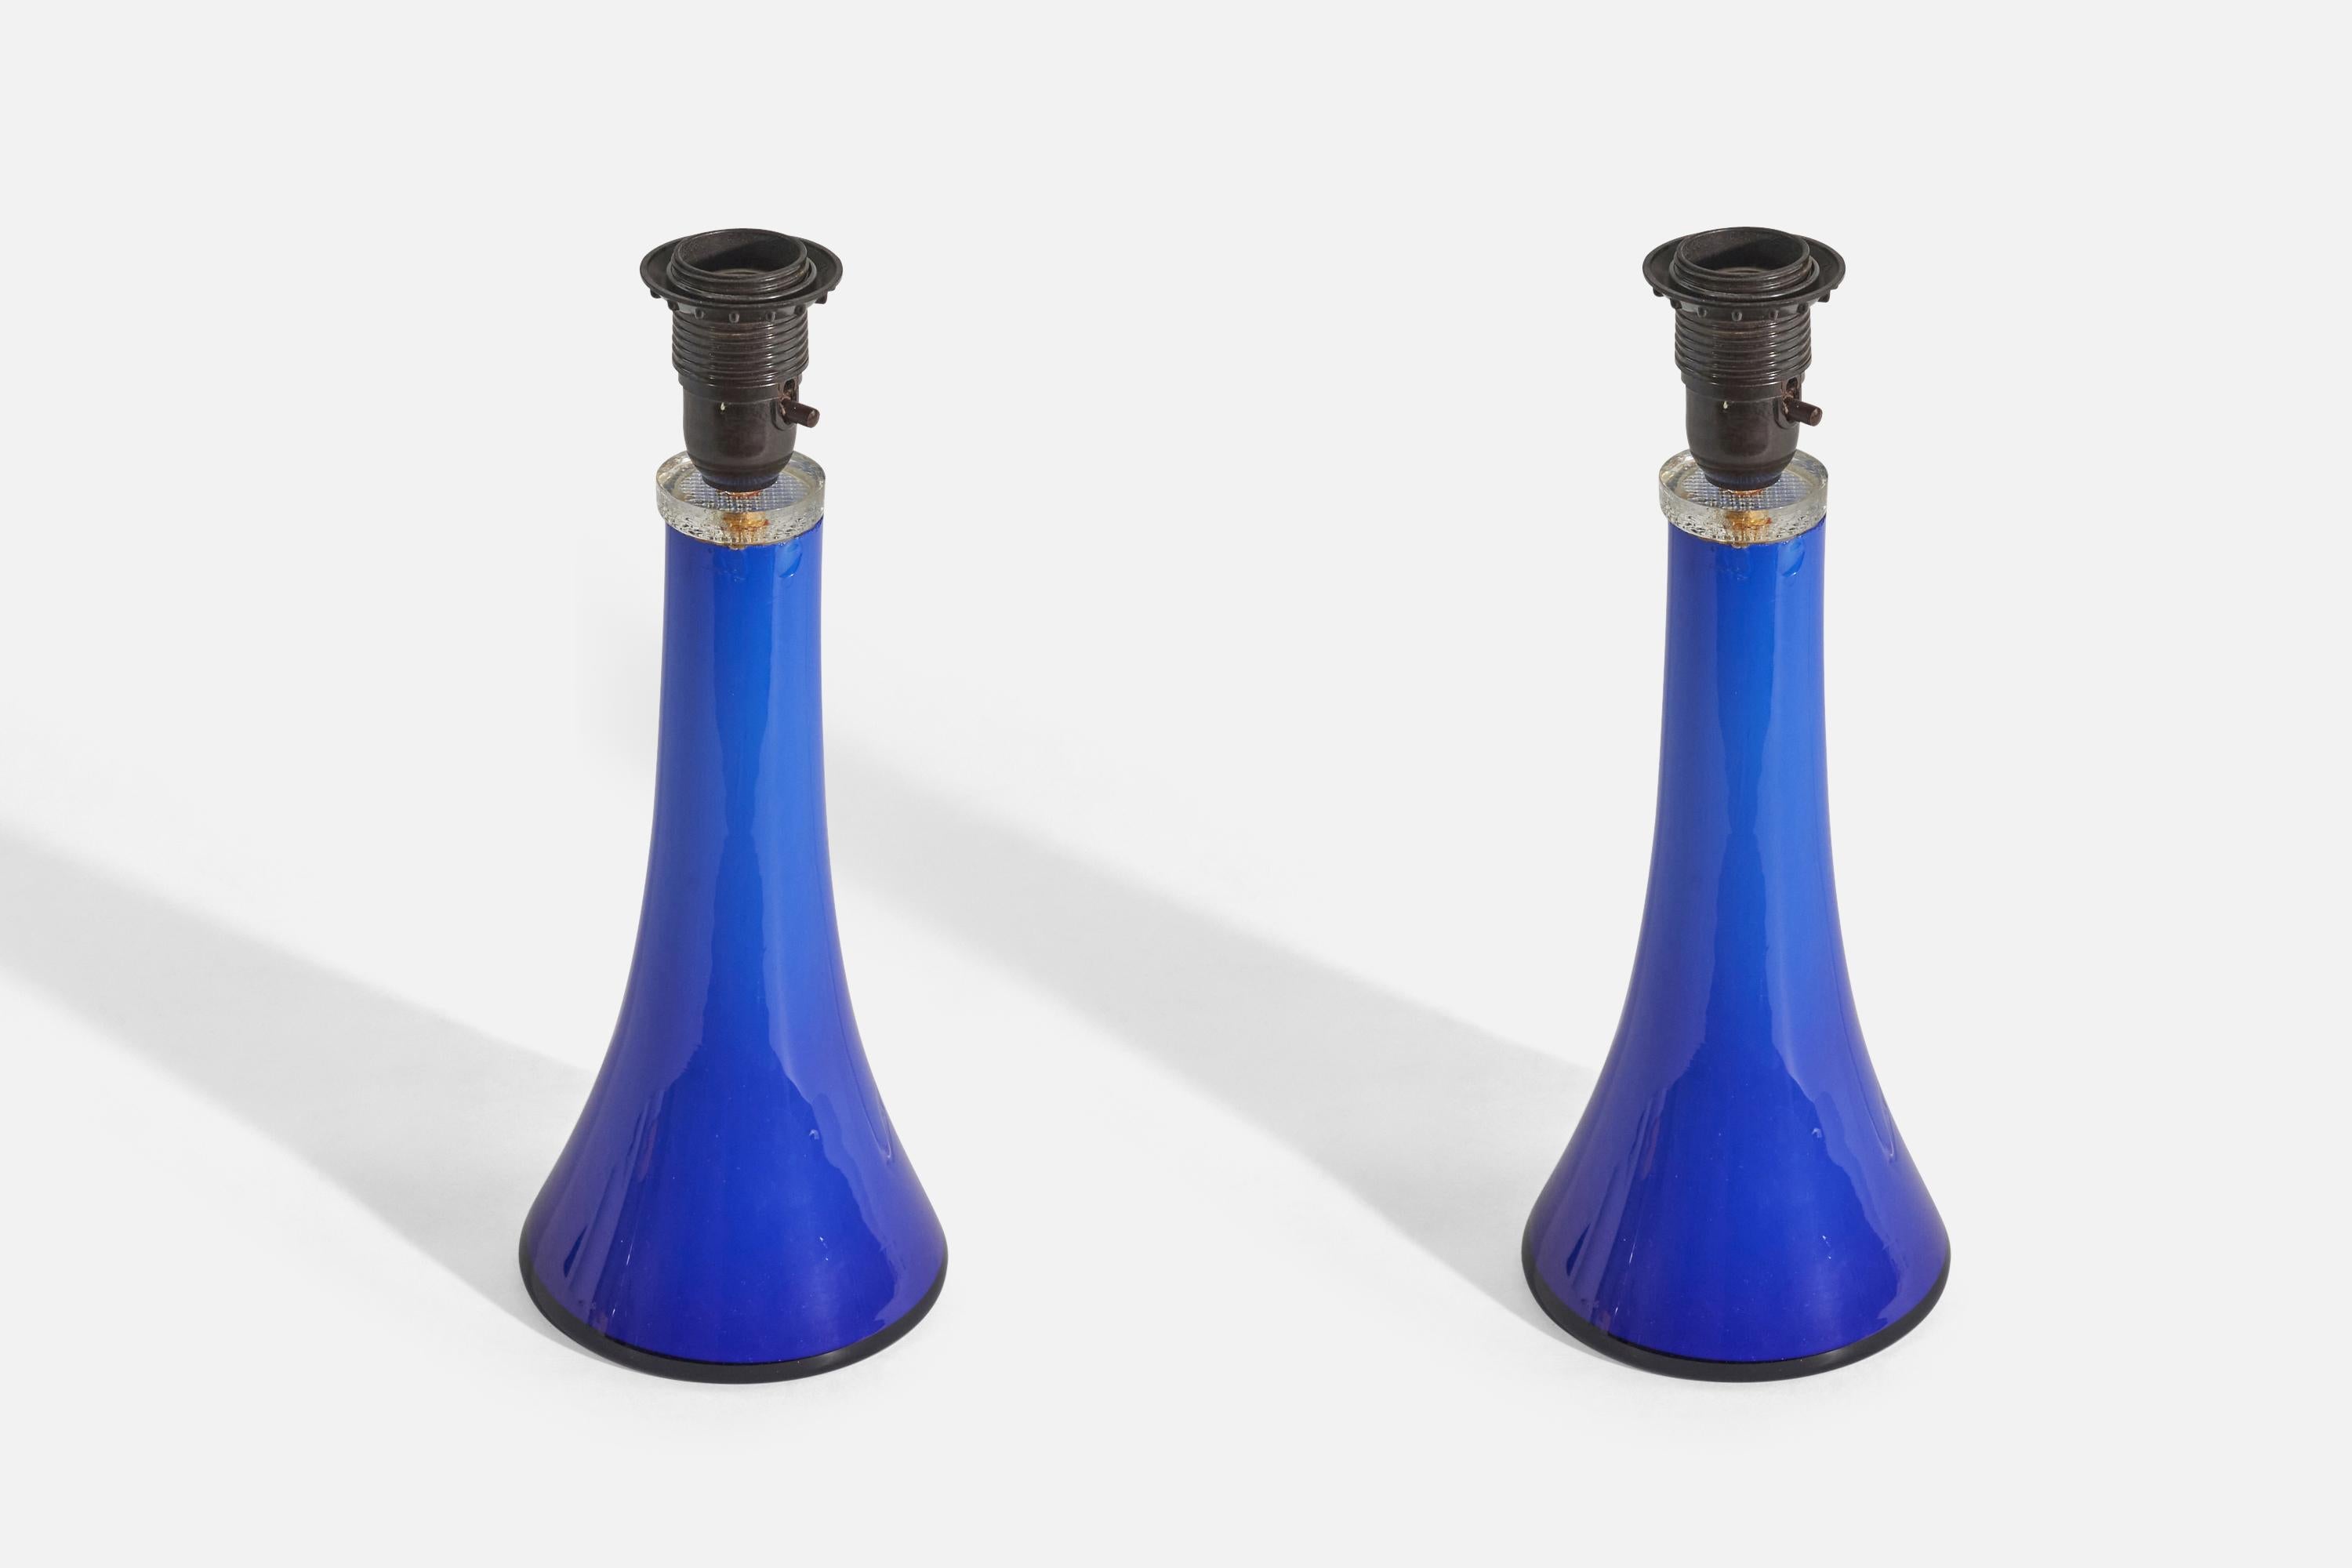 Mid-Century Modern Gert Nyström, Table Lamps, Blue Glass, Hyllinge Glasbruk, Sweden, 1960s For Sale